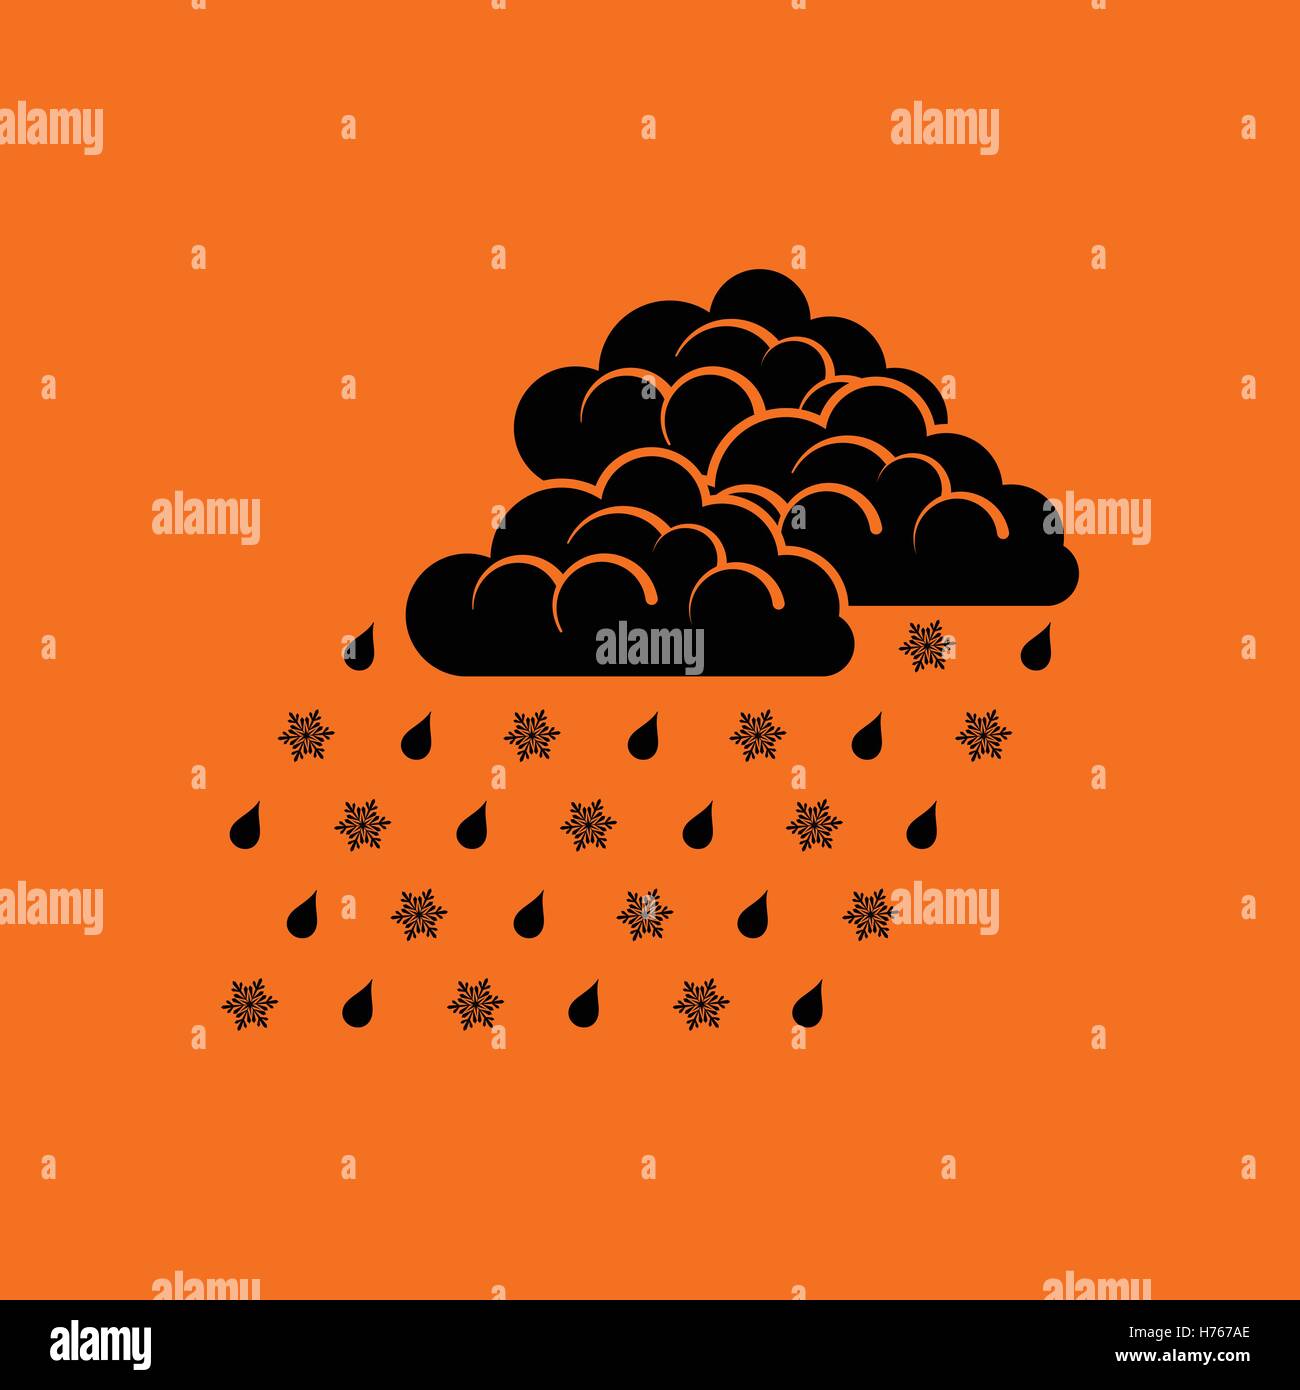 Rain with snow icon. Orange background with black. Vector illustration. Stock Vector